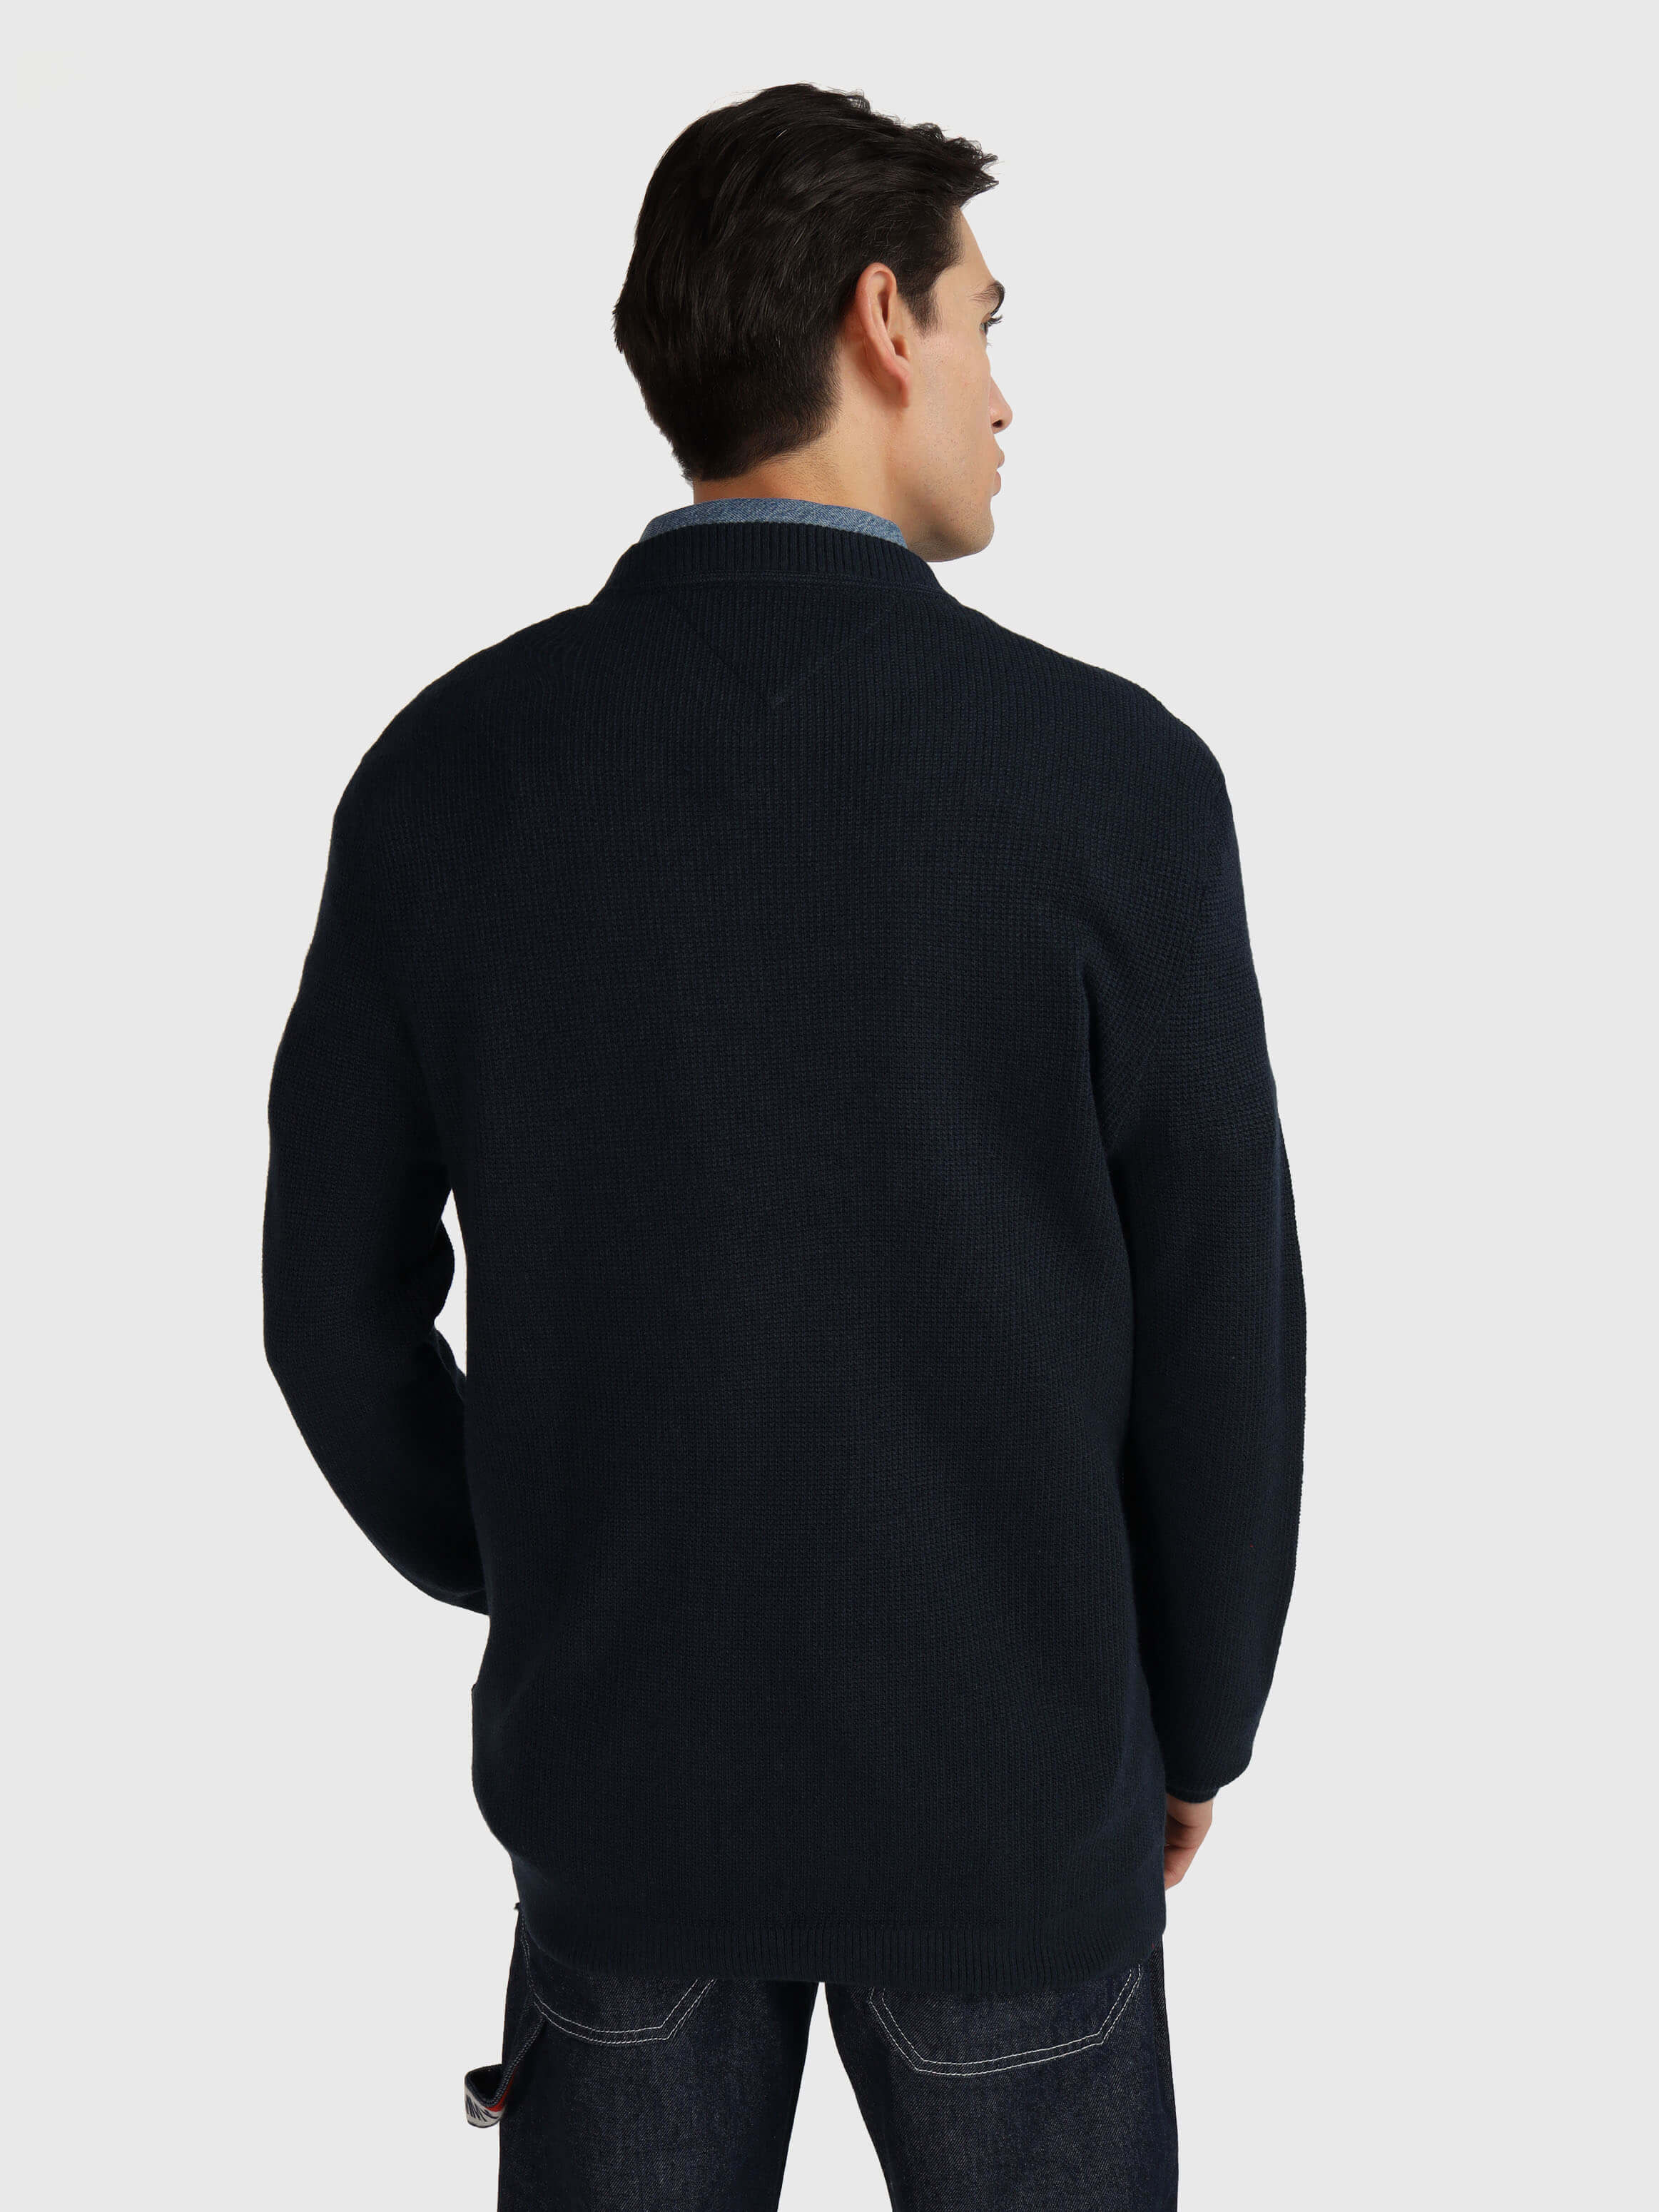 Suéter con etiqueta bordada de hombre